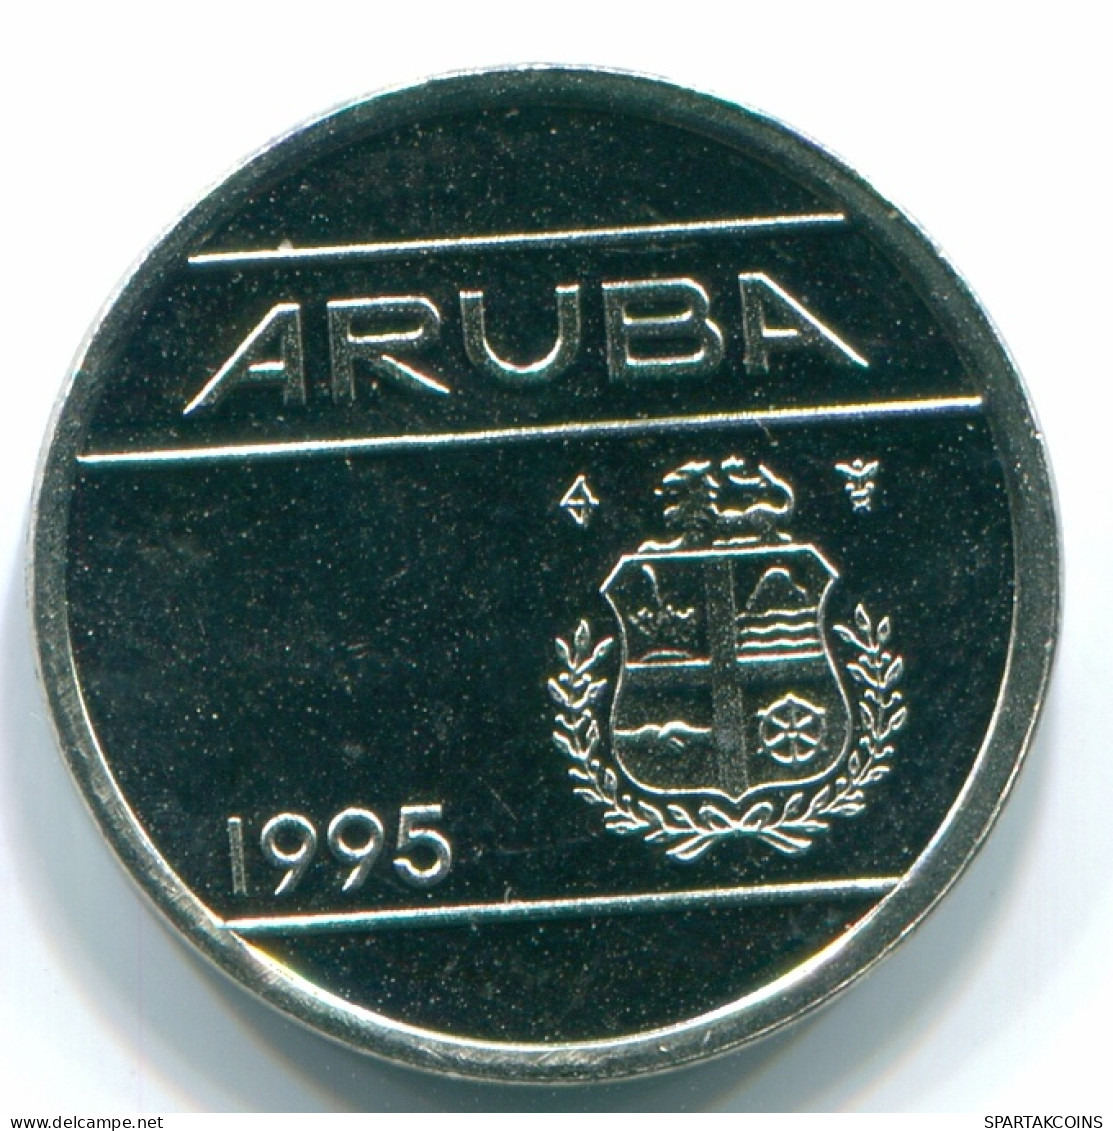 5 CENTS 1995 ARUBA (NEERLANDÉS NETHERLANDS) Nickel Colonial Moneda #S13622.E - Aruba